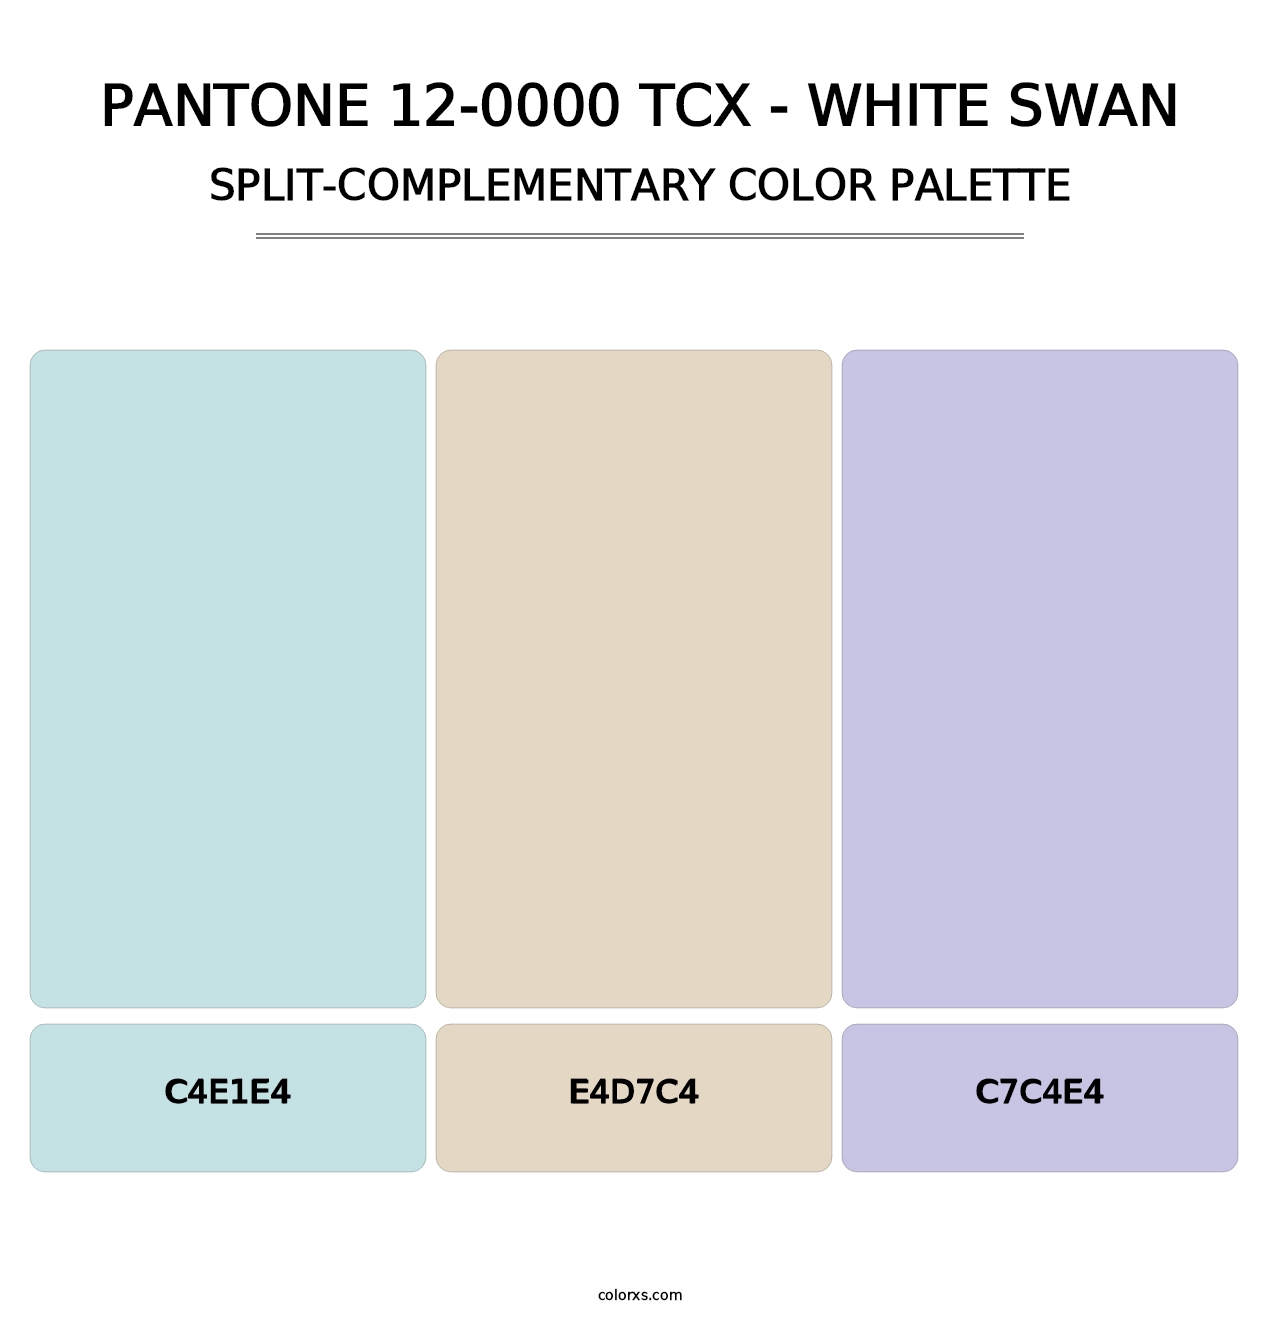 PANTONE 12-0000 TCX - White Swan - Split-Complementary Color Palette